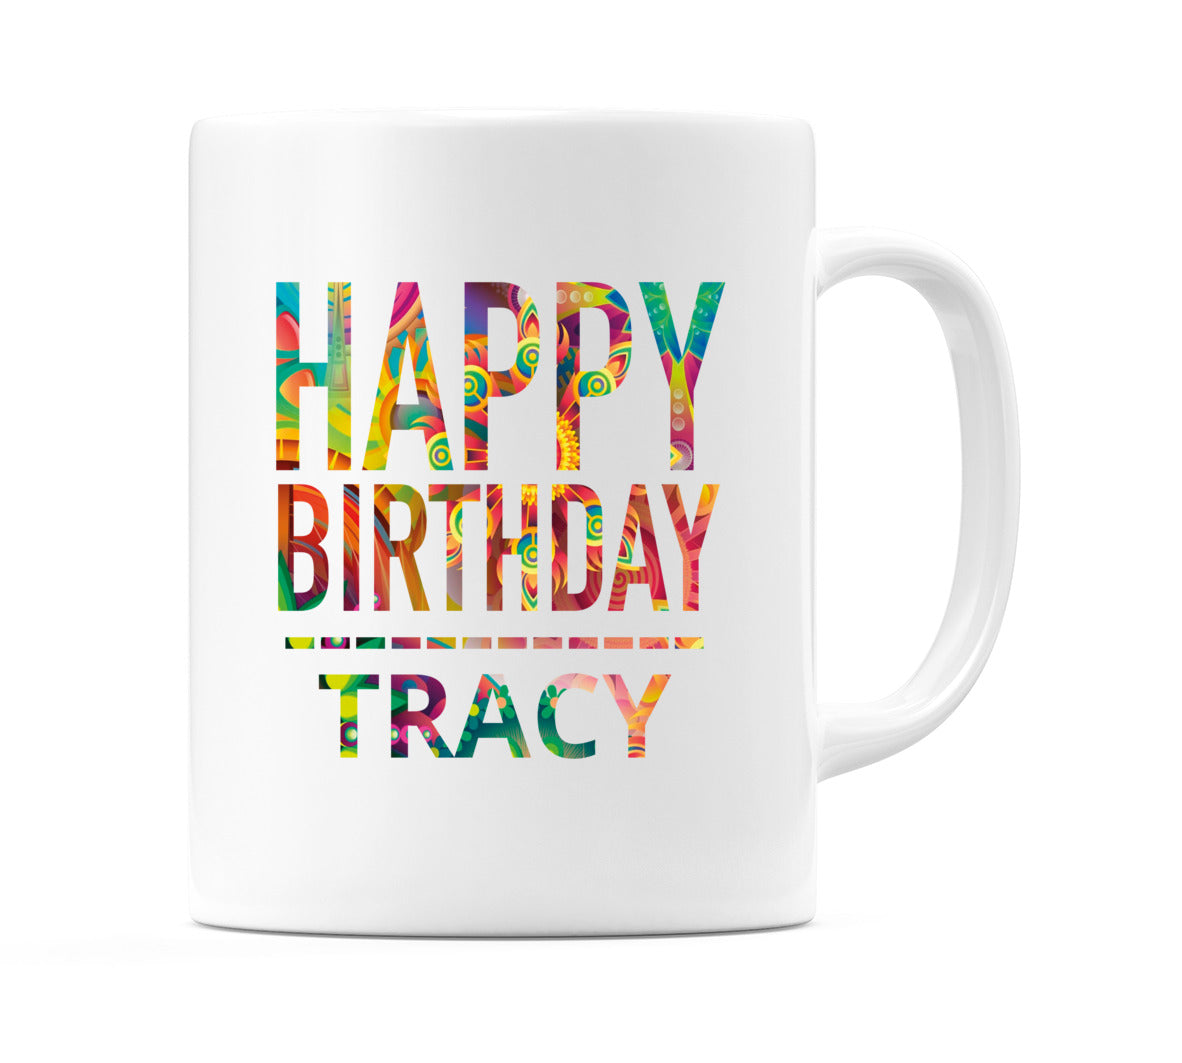 Happy Birthday Tracy (Tie Dye Effect) Mug Cup by WeDoMugs